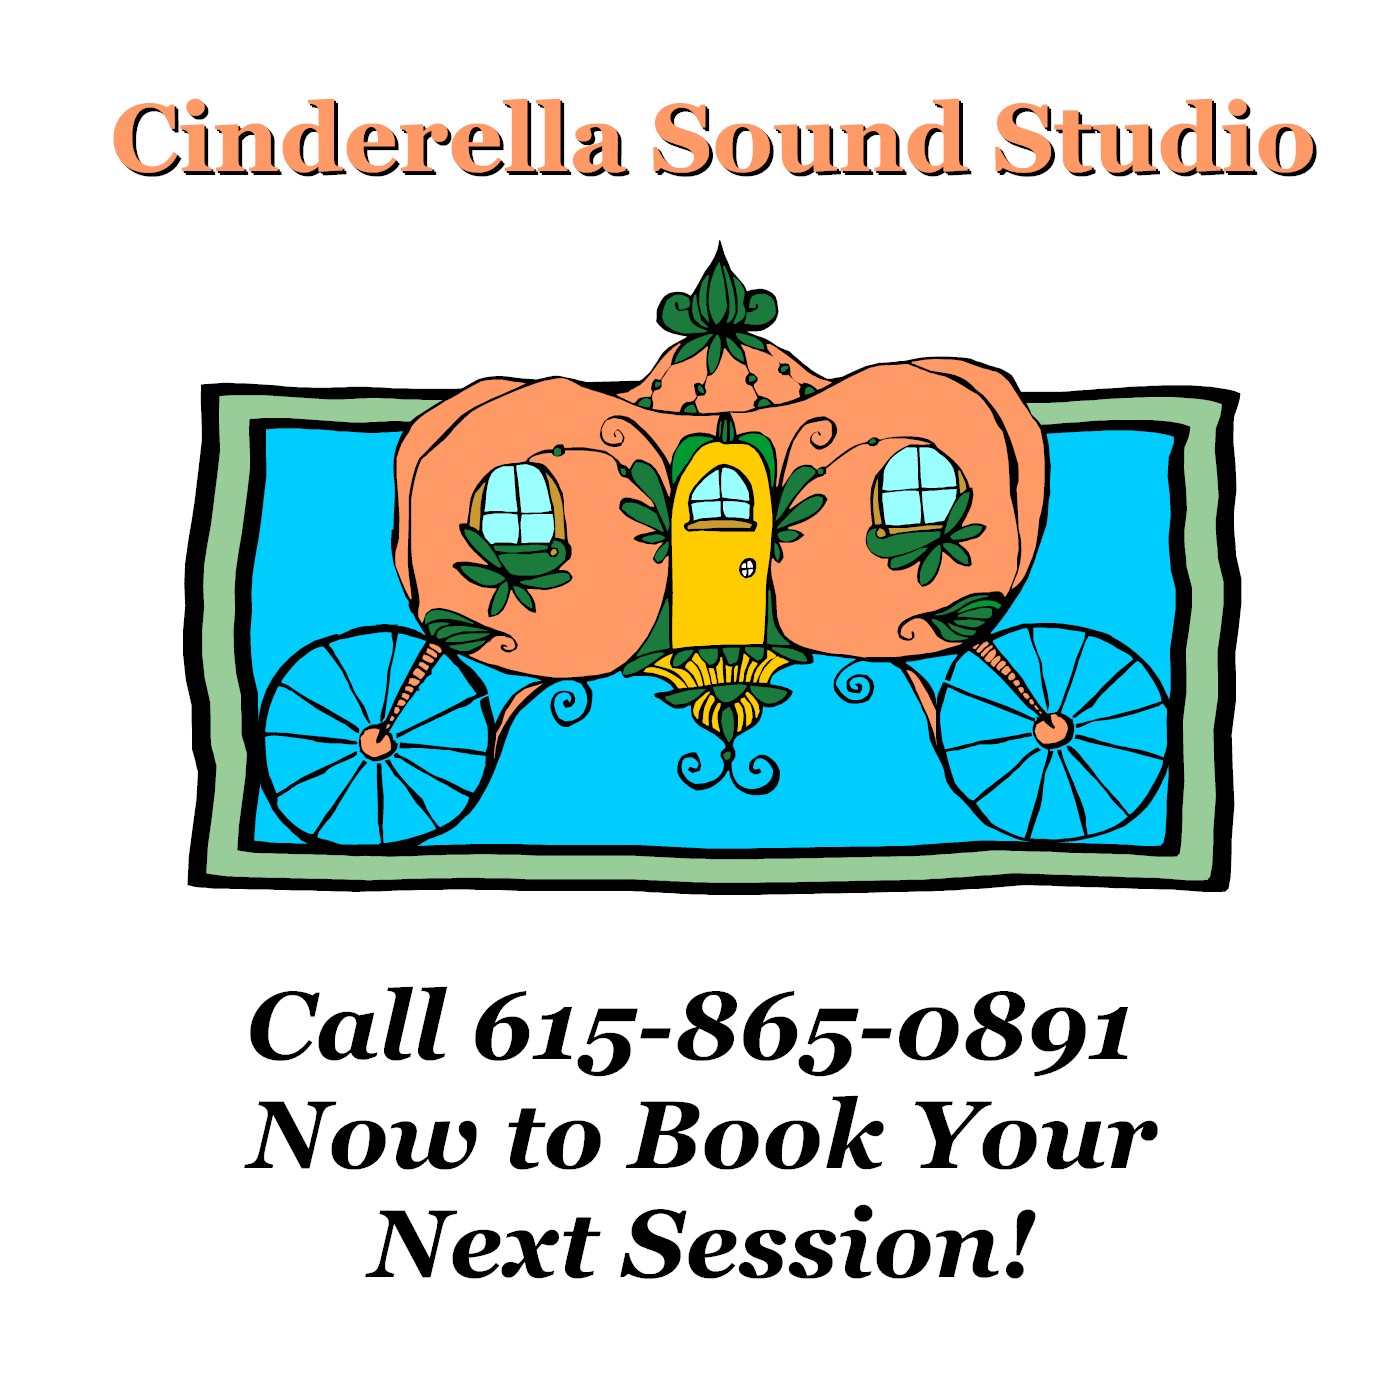 Nashville Songs Studio - Cinderella Sound & Wayne Moss